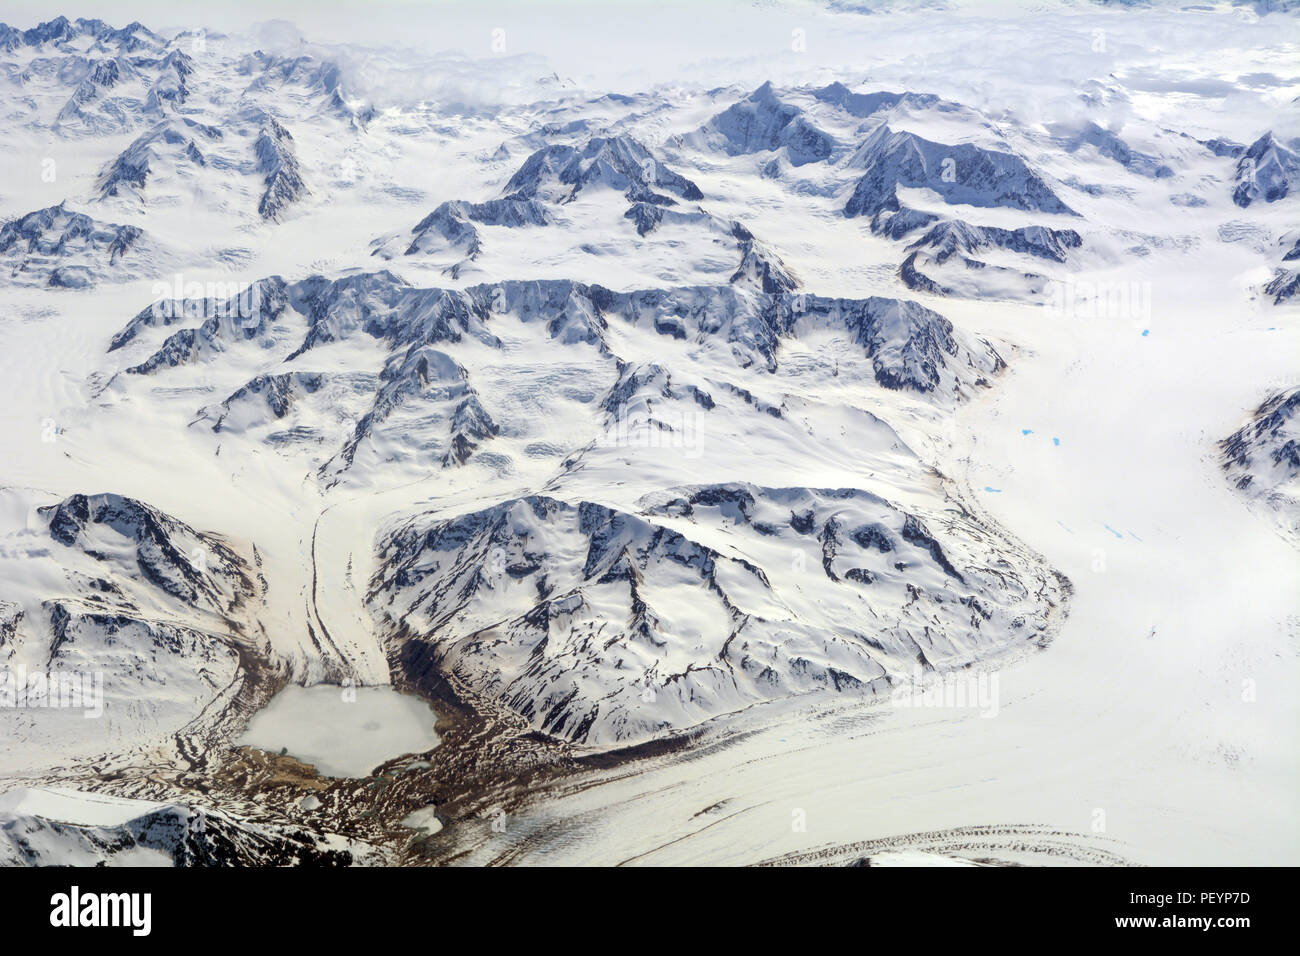 Una veduta aerea di ghiacciai e montagne icefields in Wrangell St. Elias National Park e preservare, Alaska, Stati Uniti. Foto Stock